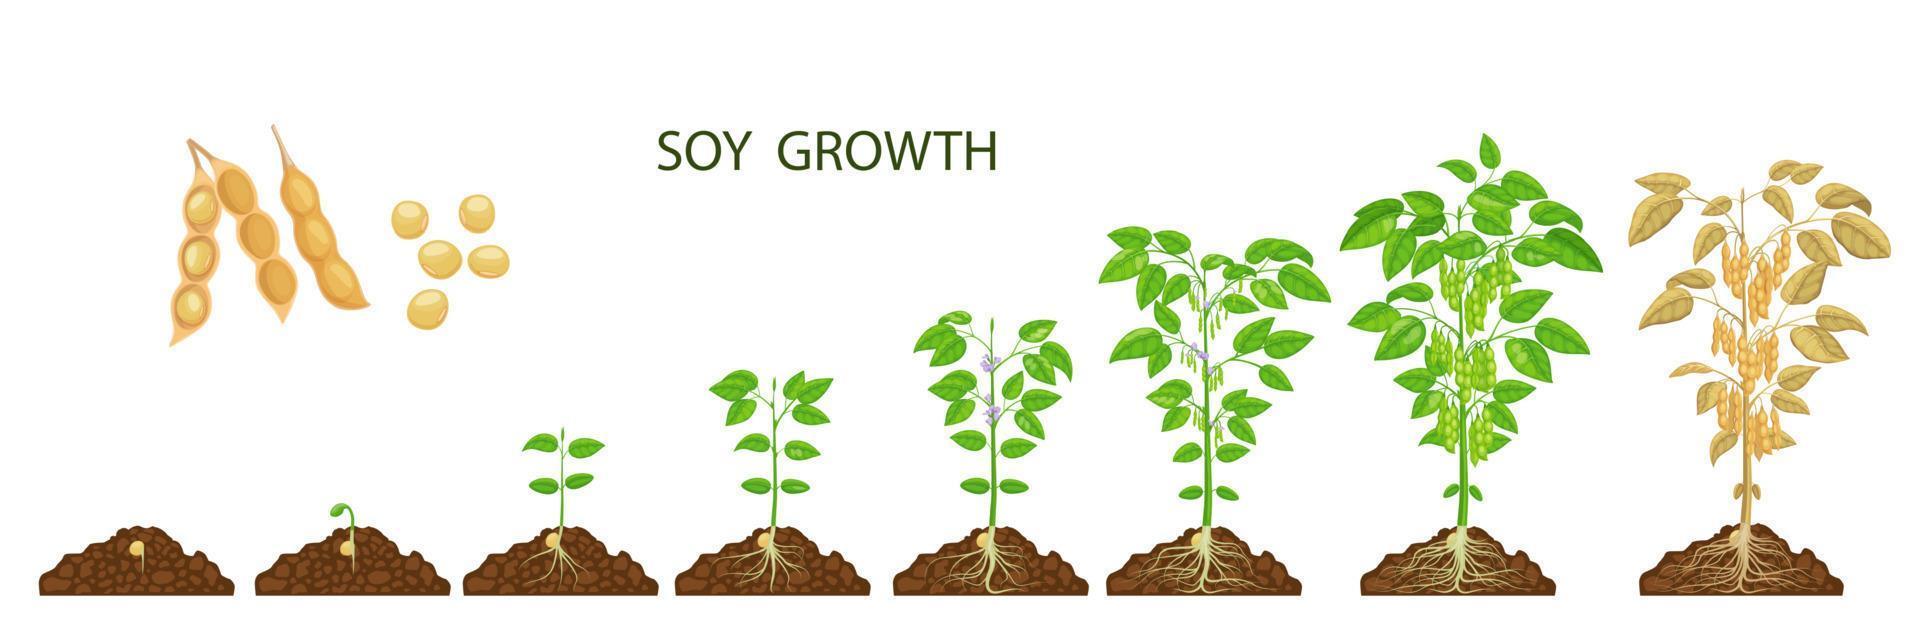 estágios de crescimento de grãos de soja, plantas de soja, brotos vetor